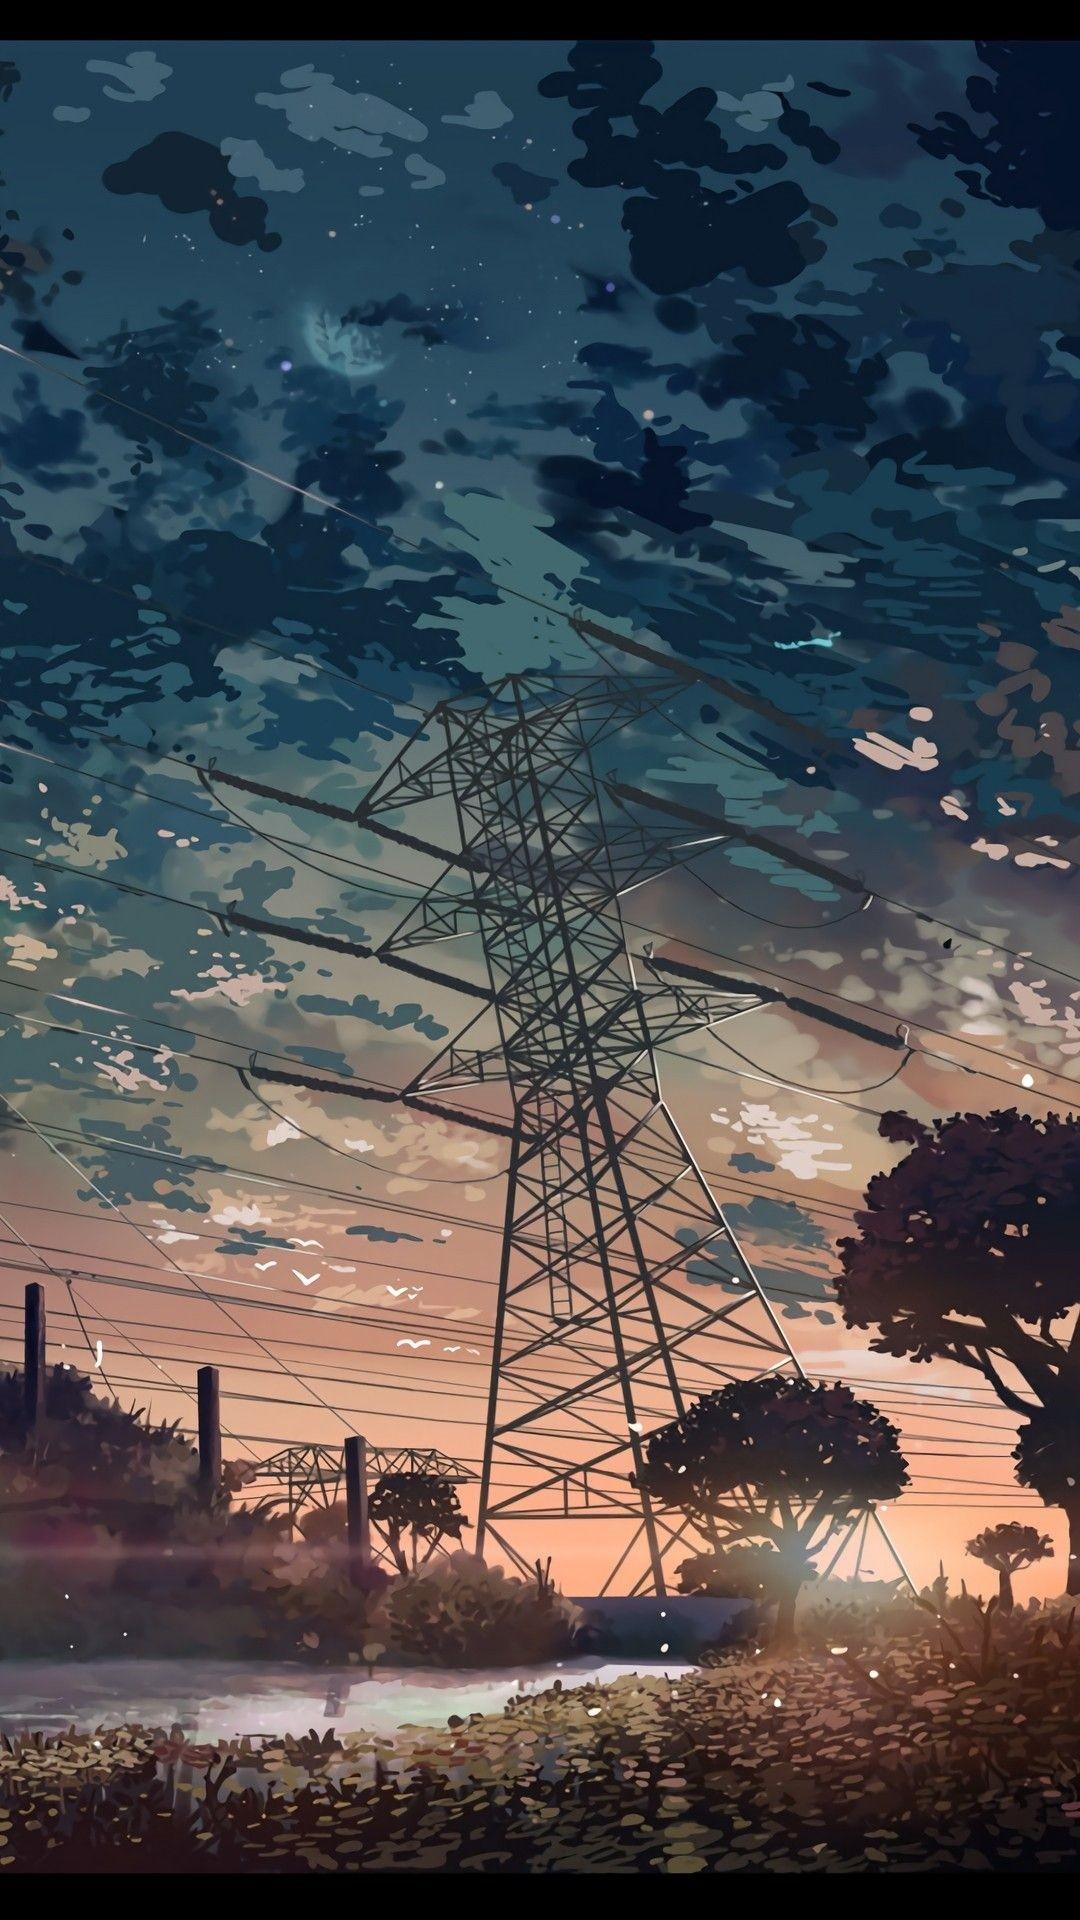 Anime Sky 4k Wallpapers - Top Free Anime Sky 4k Backgrounds ...